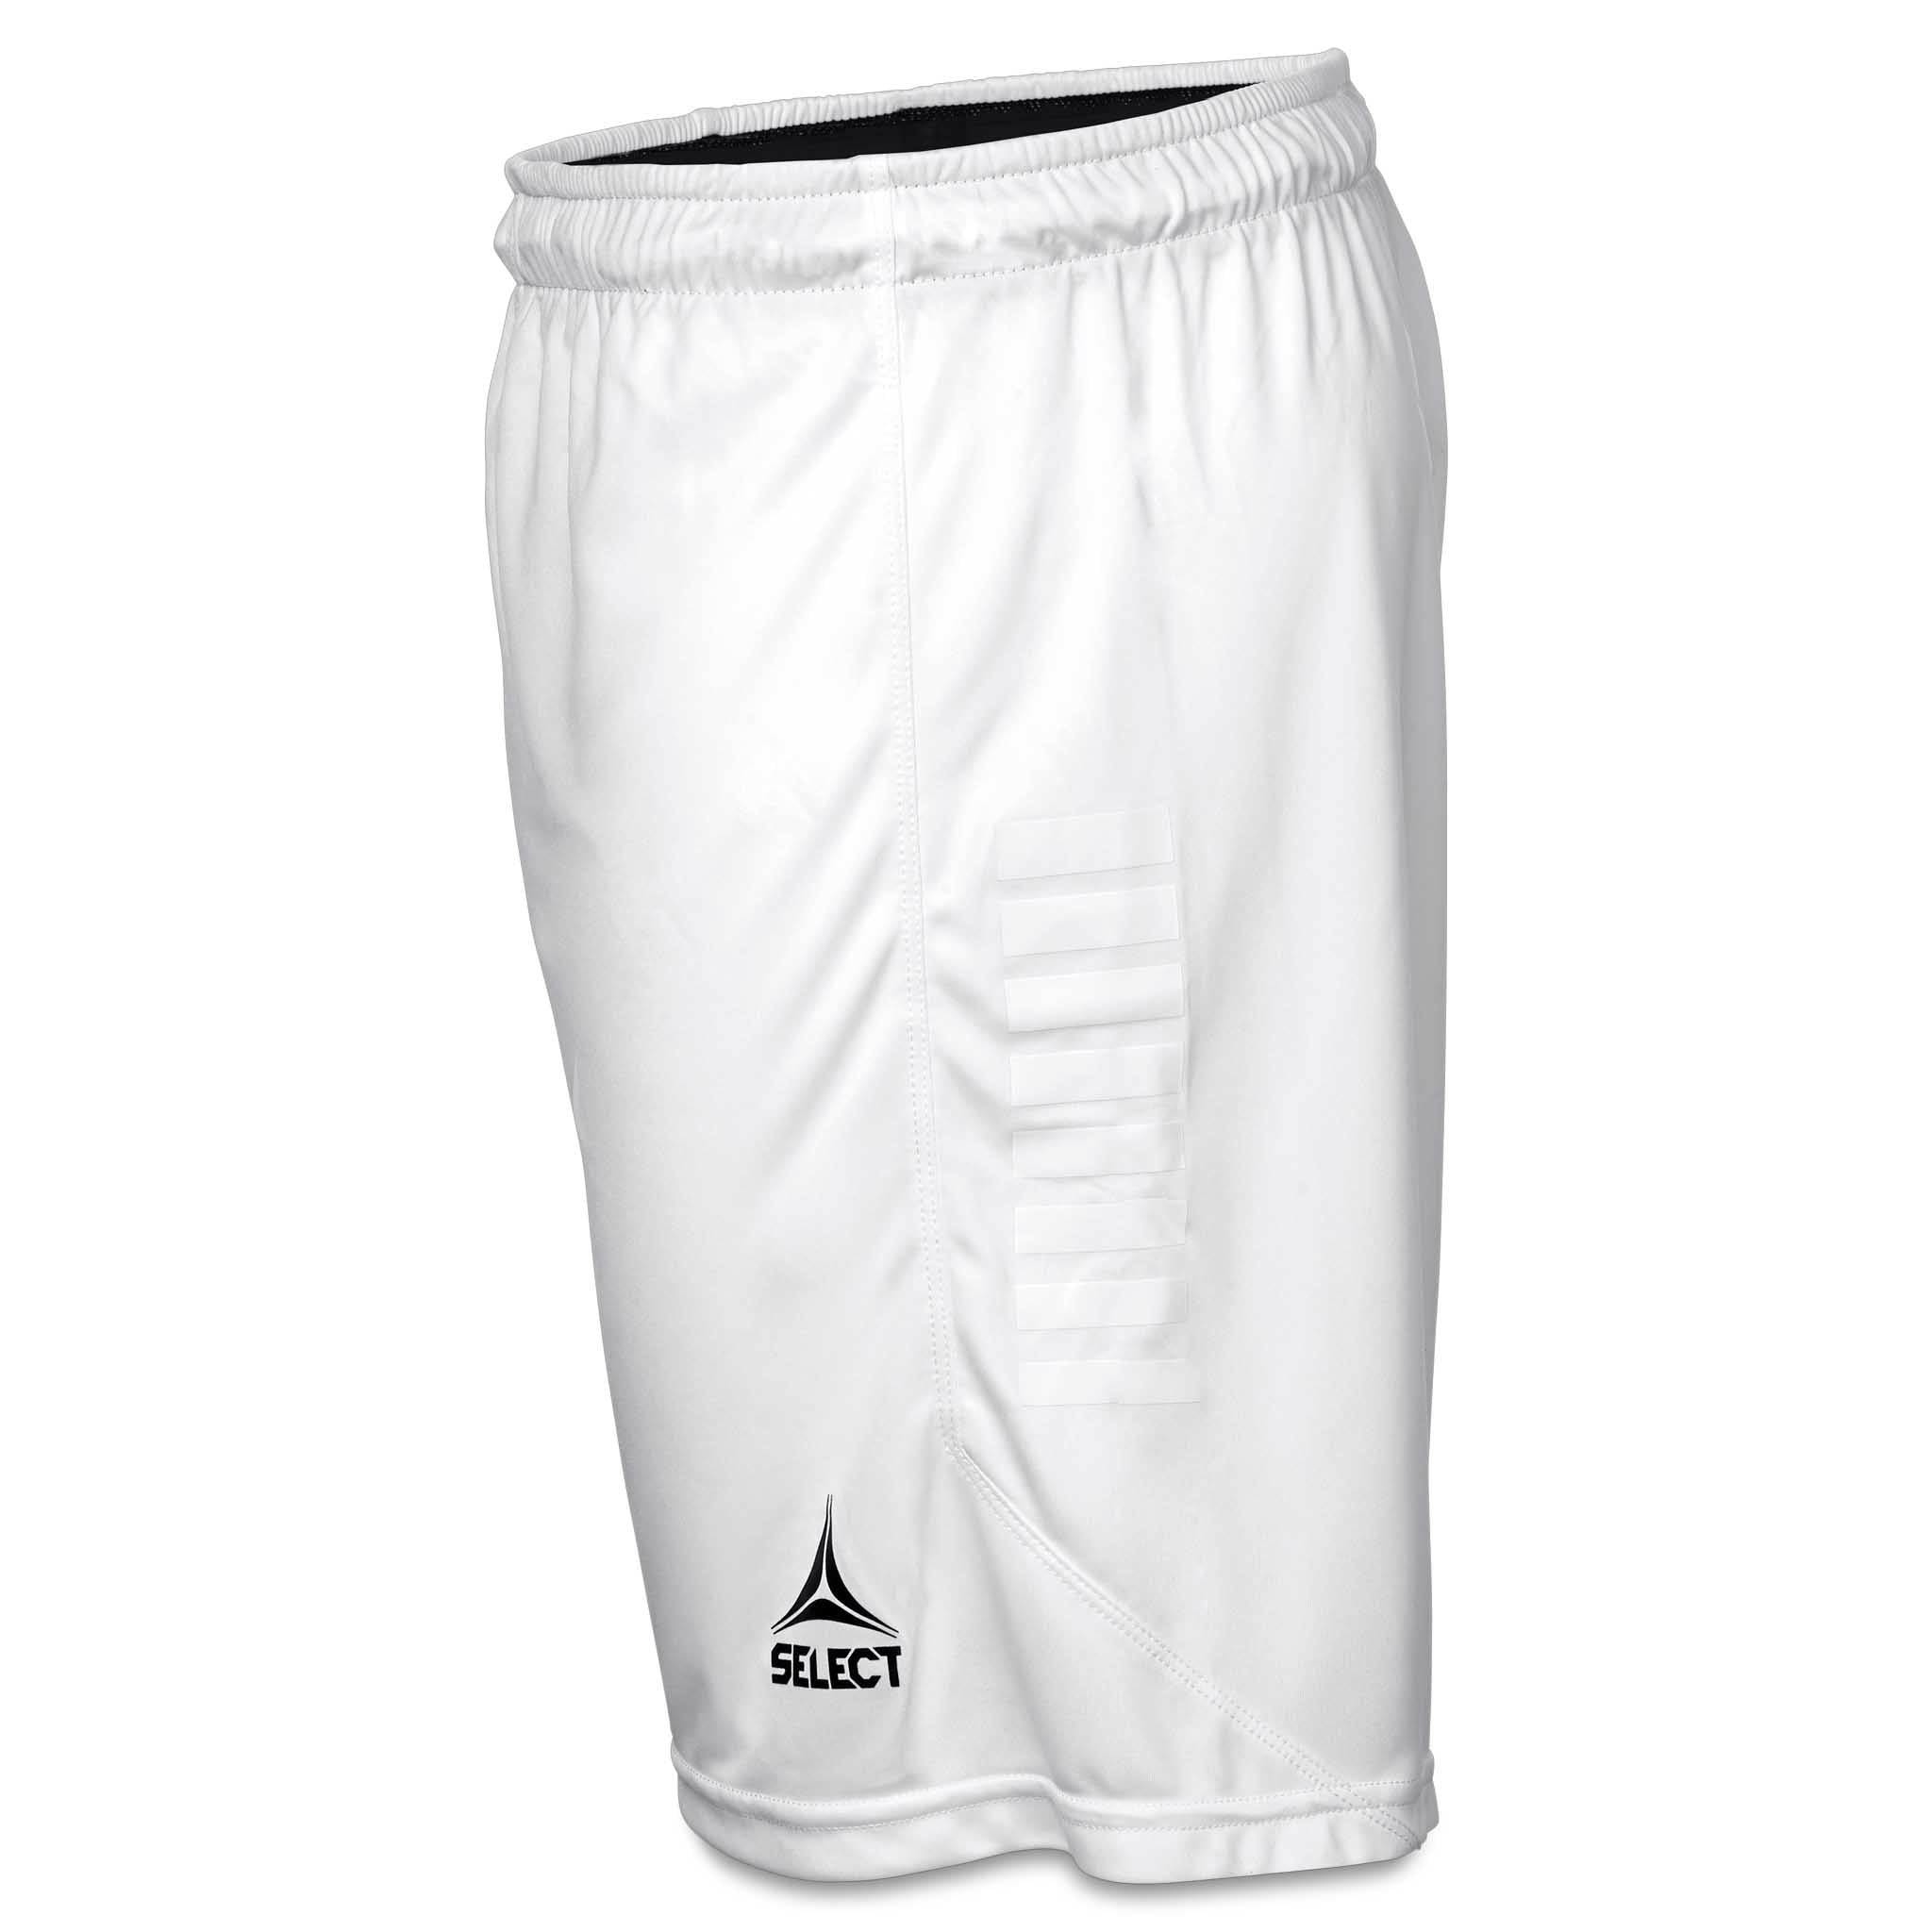 Monaco shorts - Barn #färg_white/white